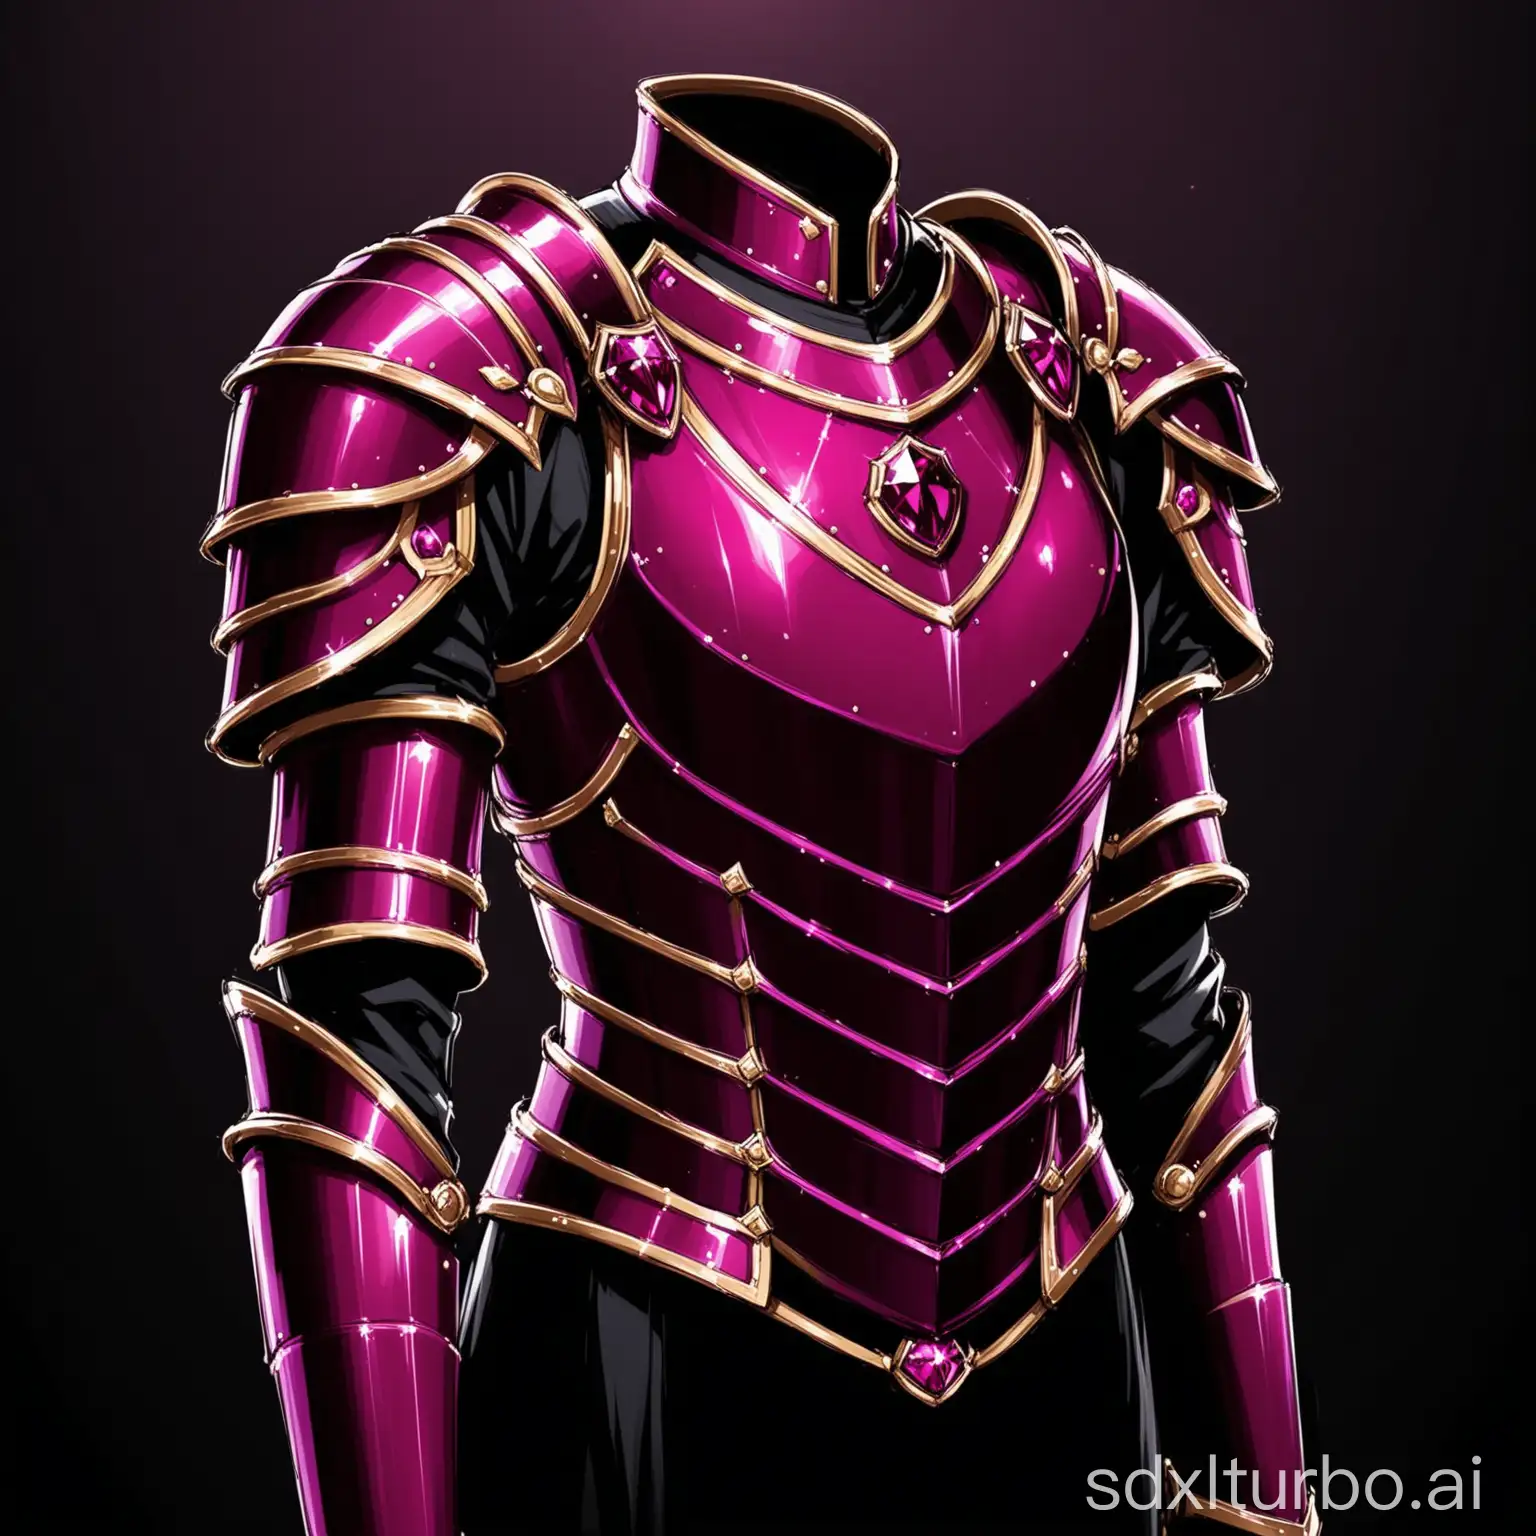 Elegant-Rhodolite-Chest-Armor-on-Uniform-Black-Background